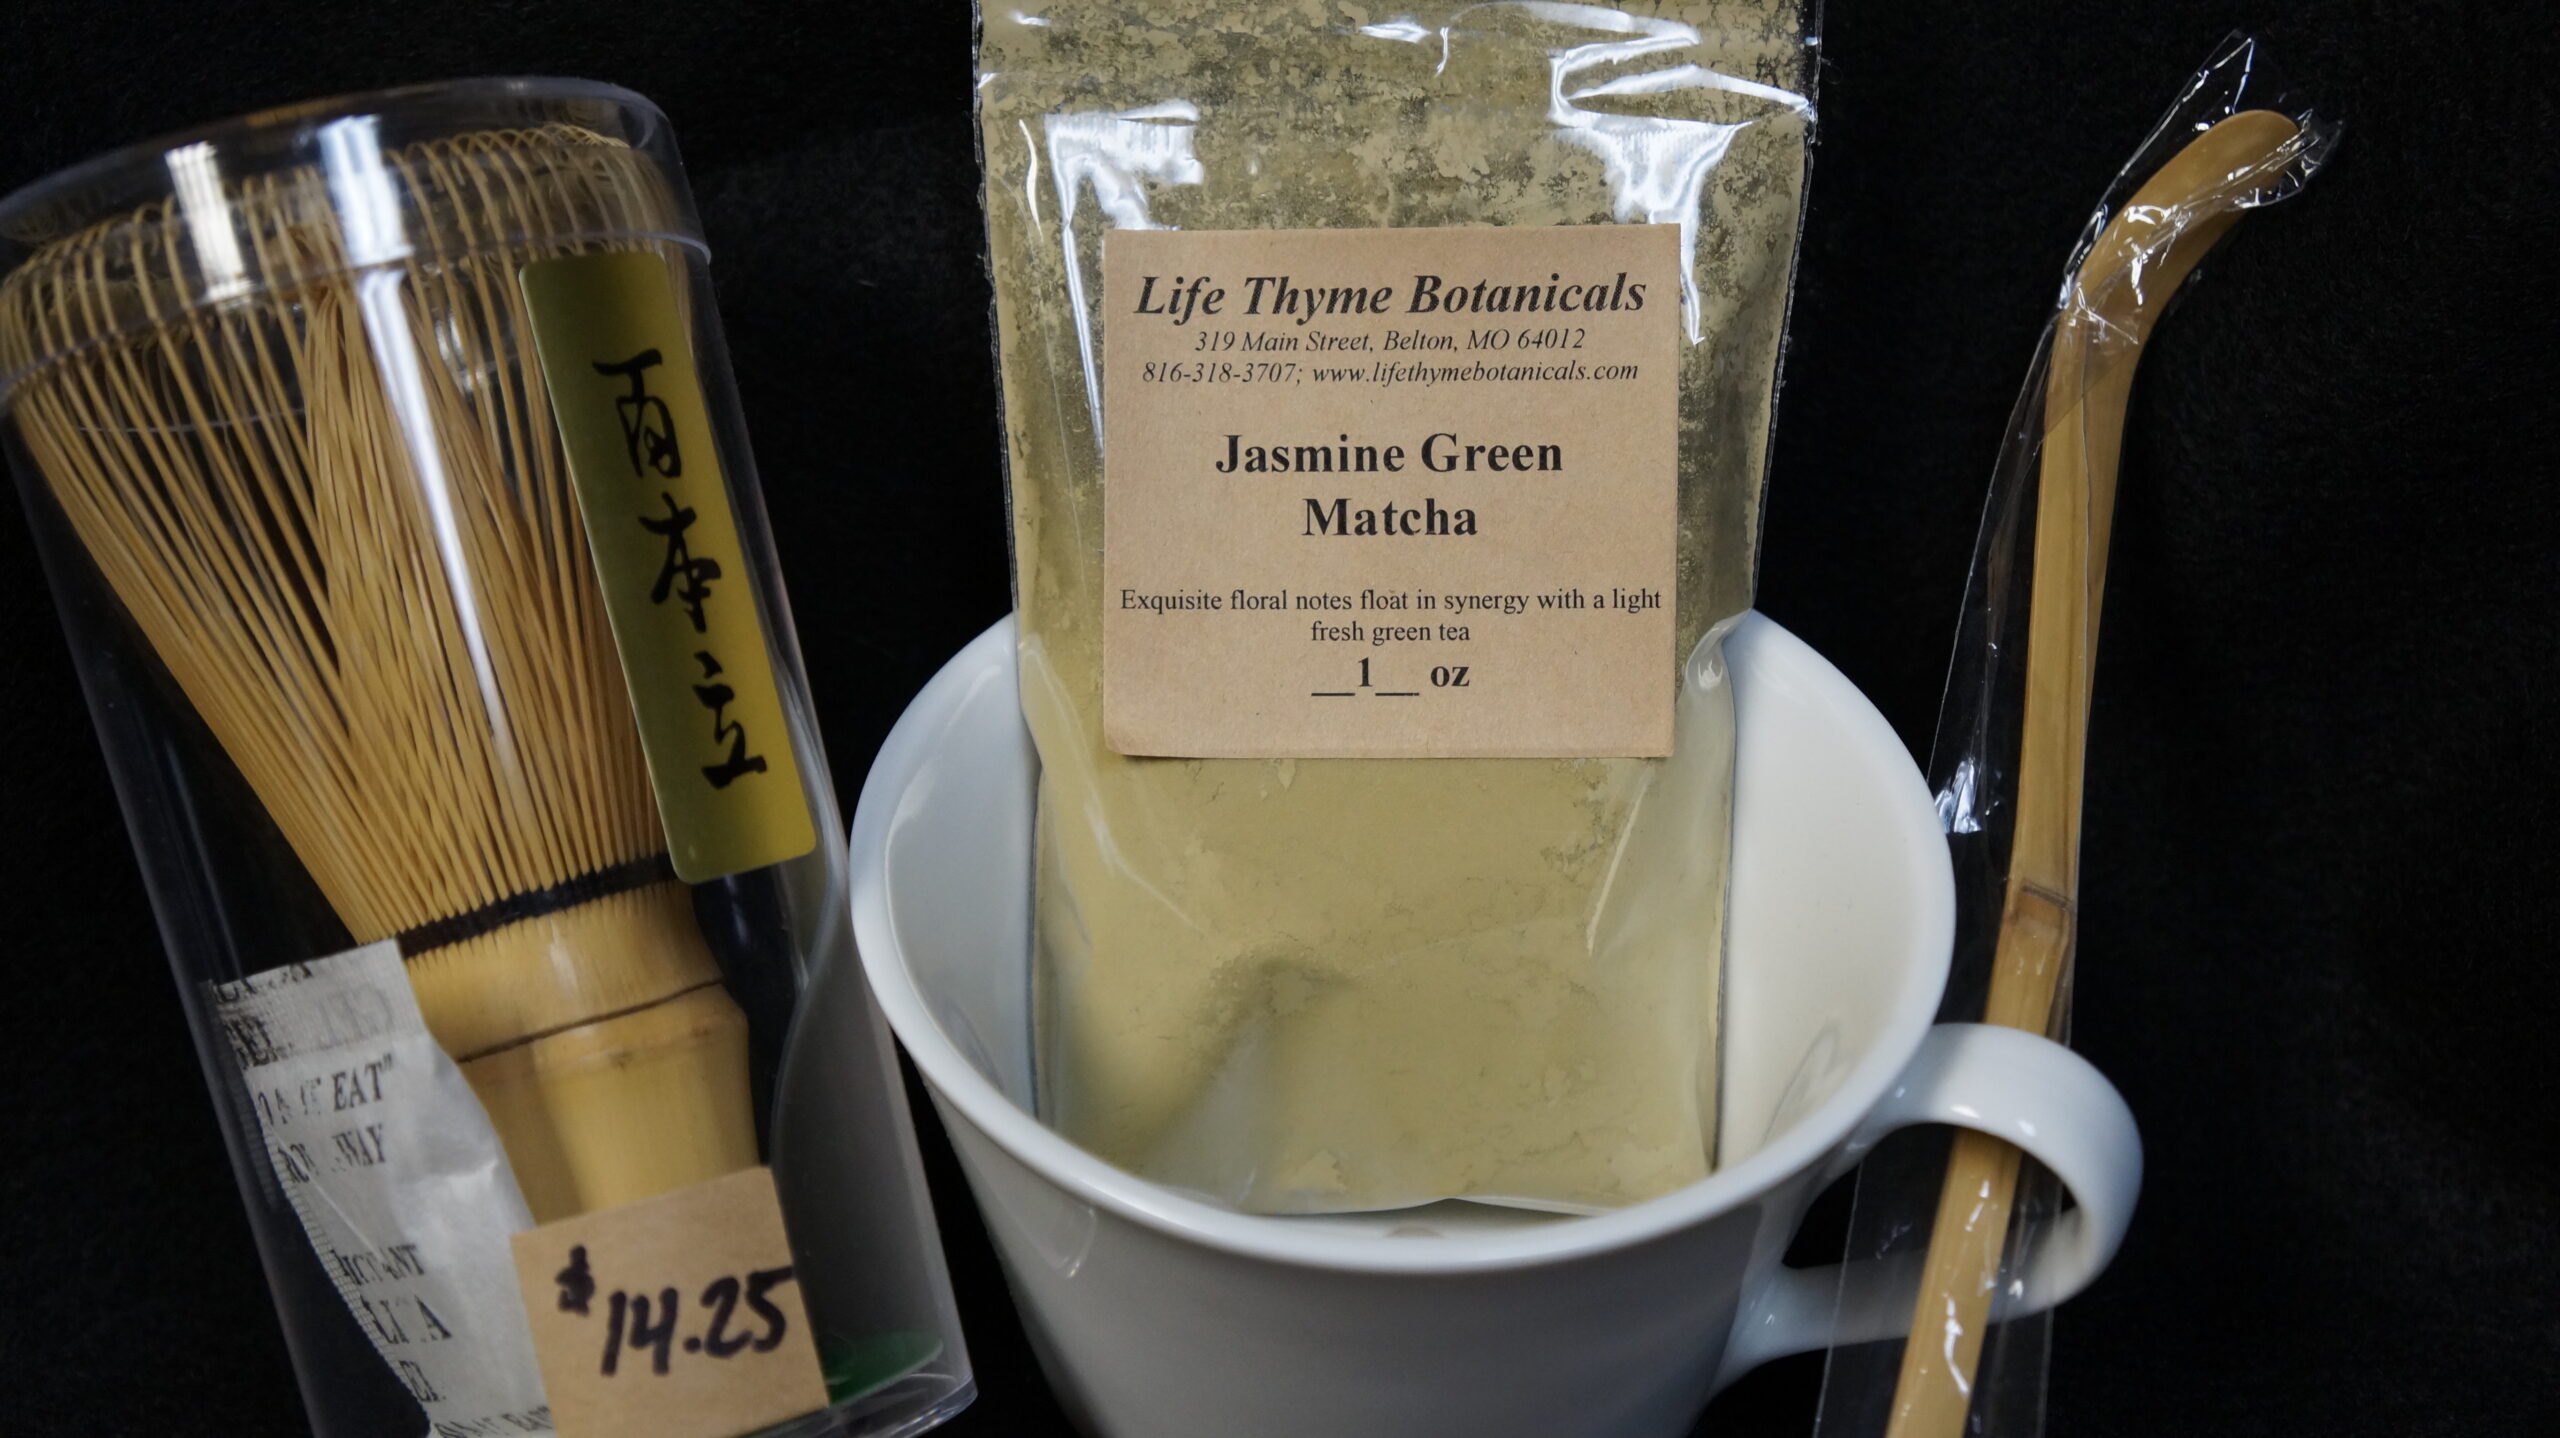 lifethyme botanicals jasmine green matcha